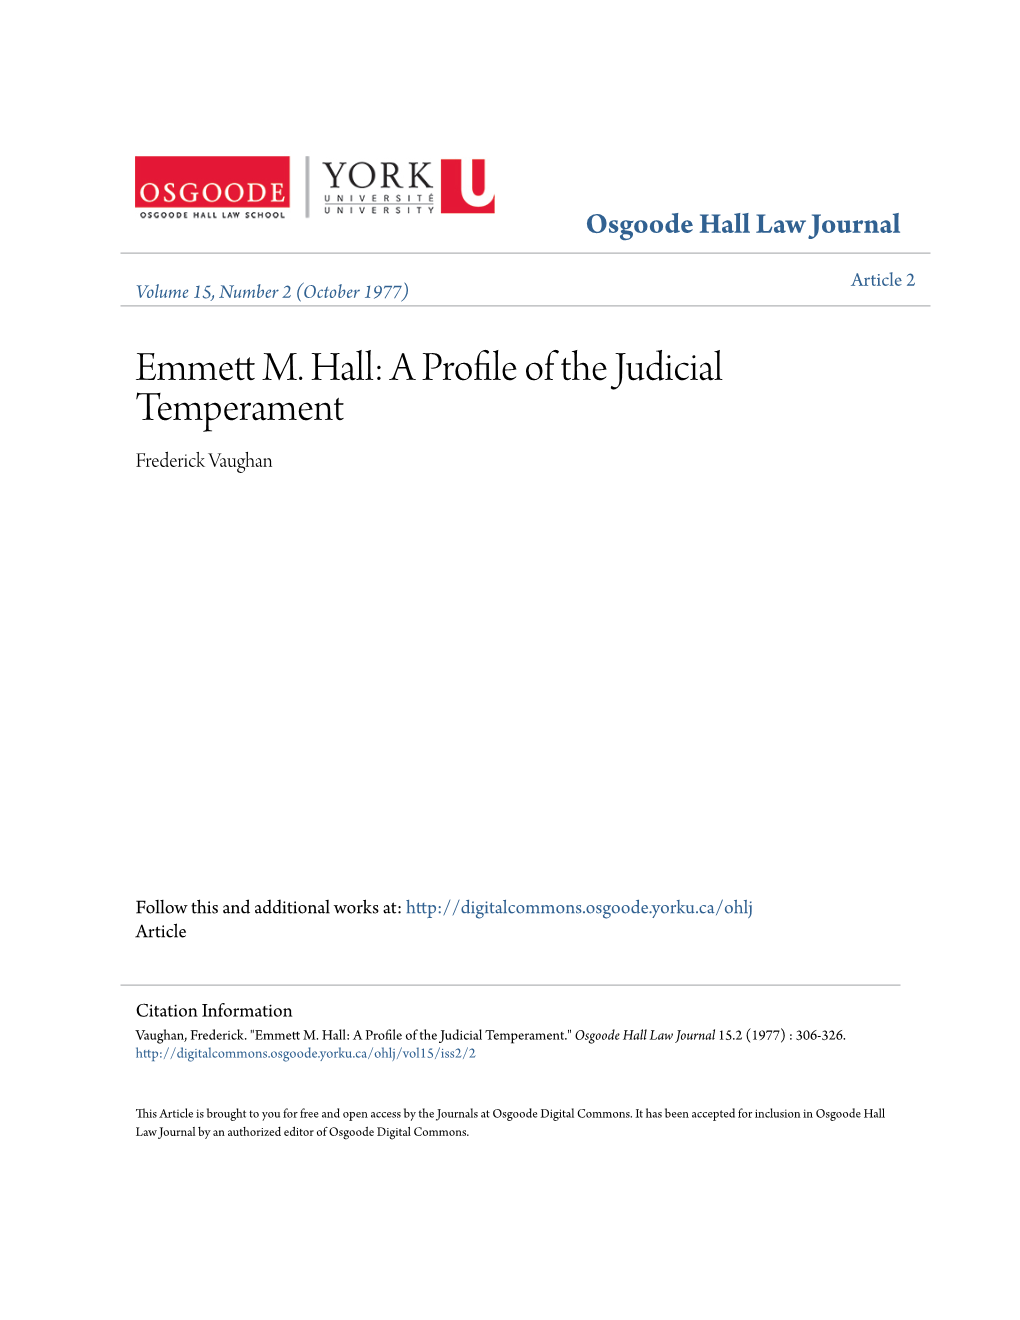 Emmett M. Hall: a Profile of the Judicial Temperament Frederick Vaughan